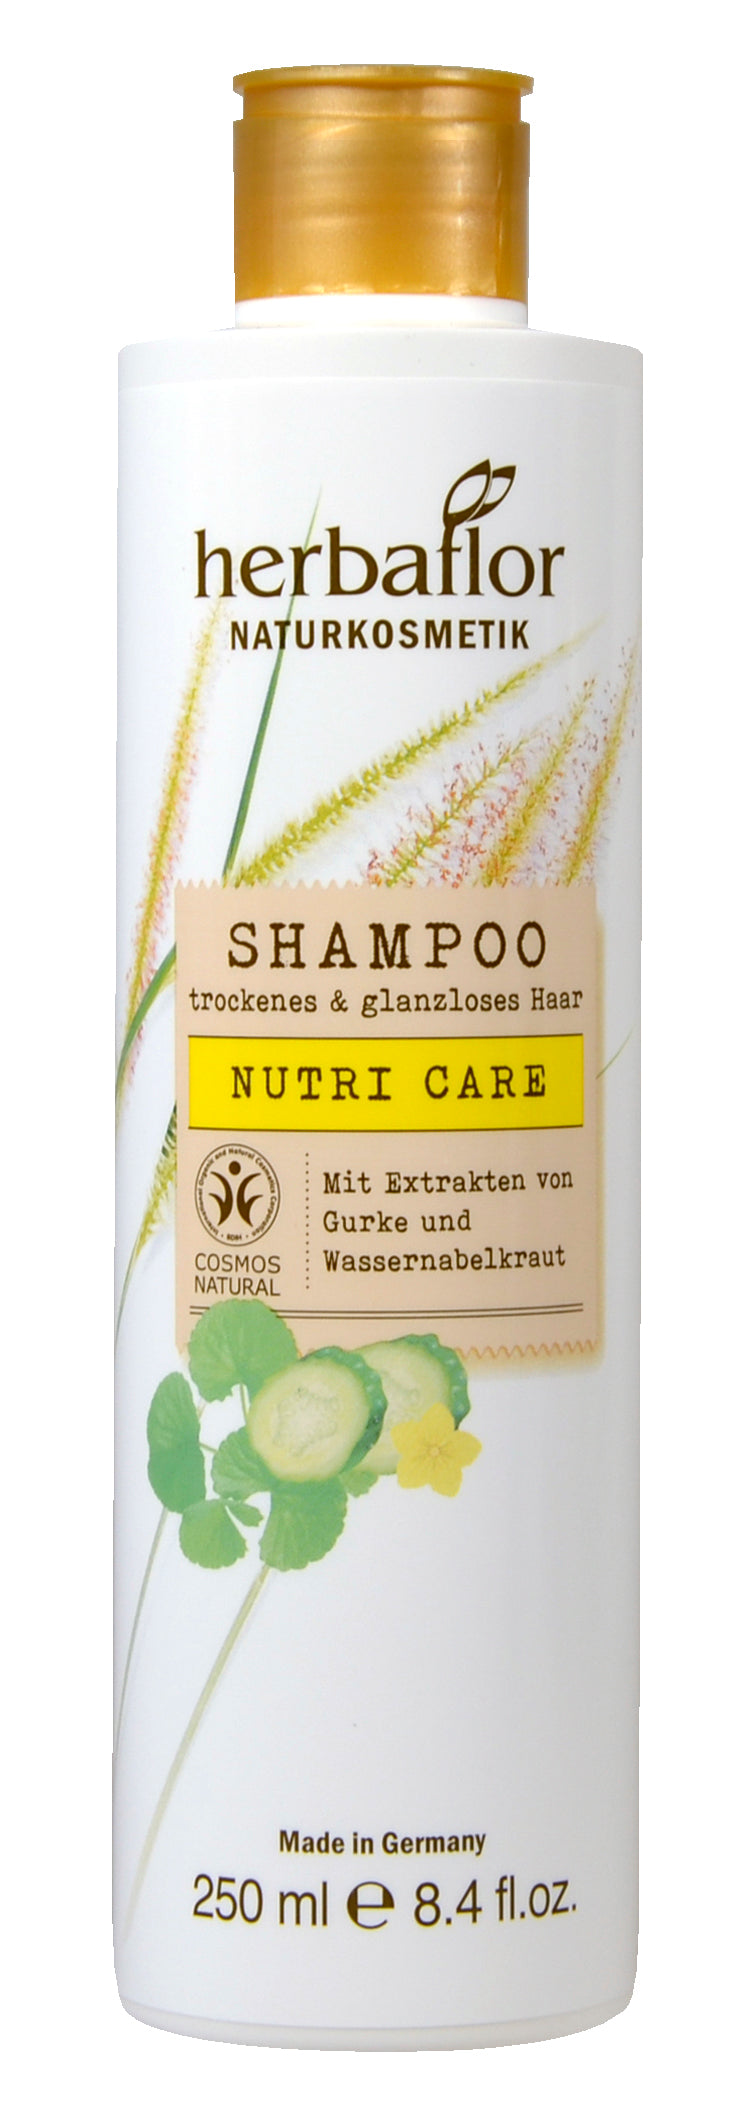 Nutri Care Shampoo natural cosmetics 250 ml